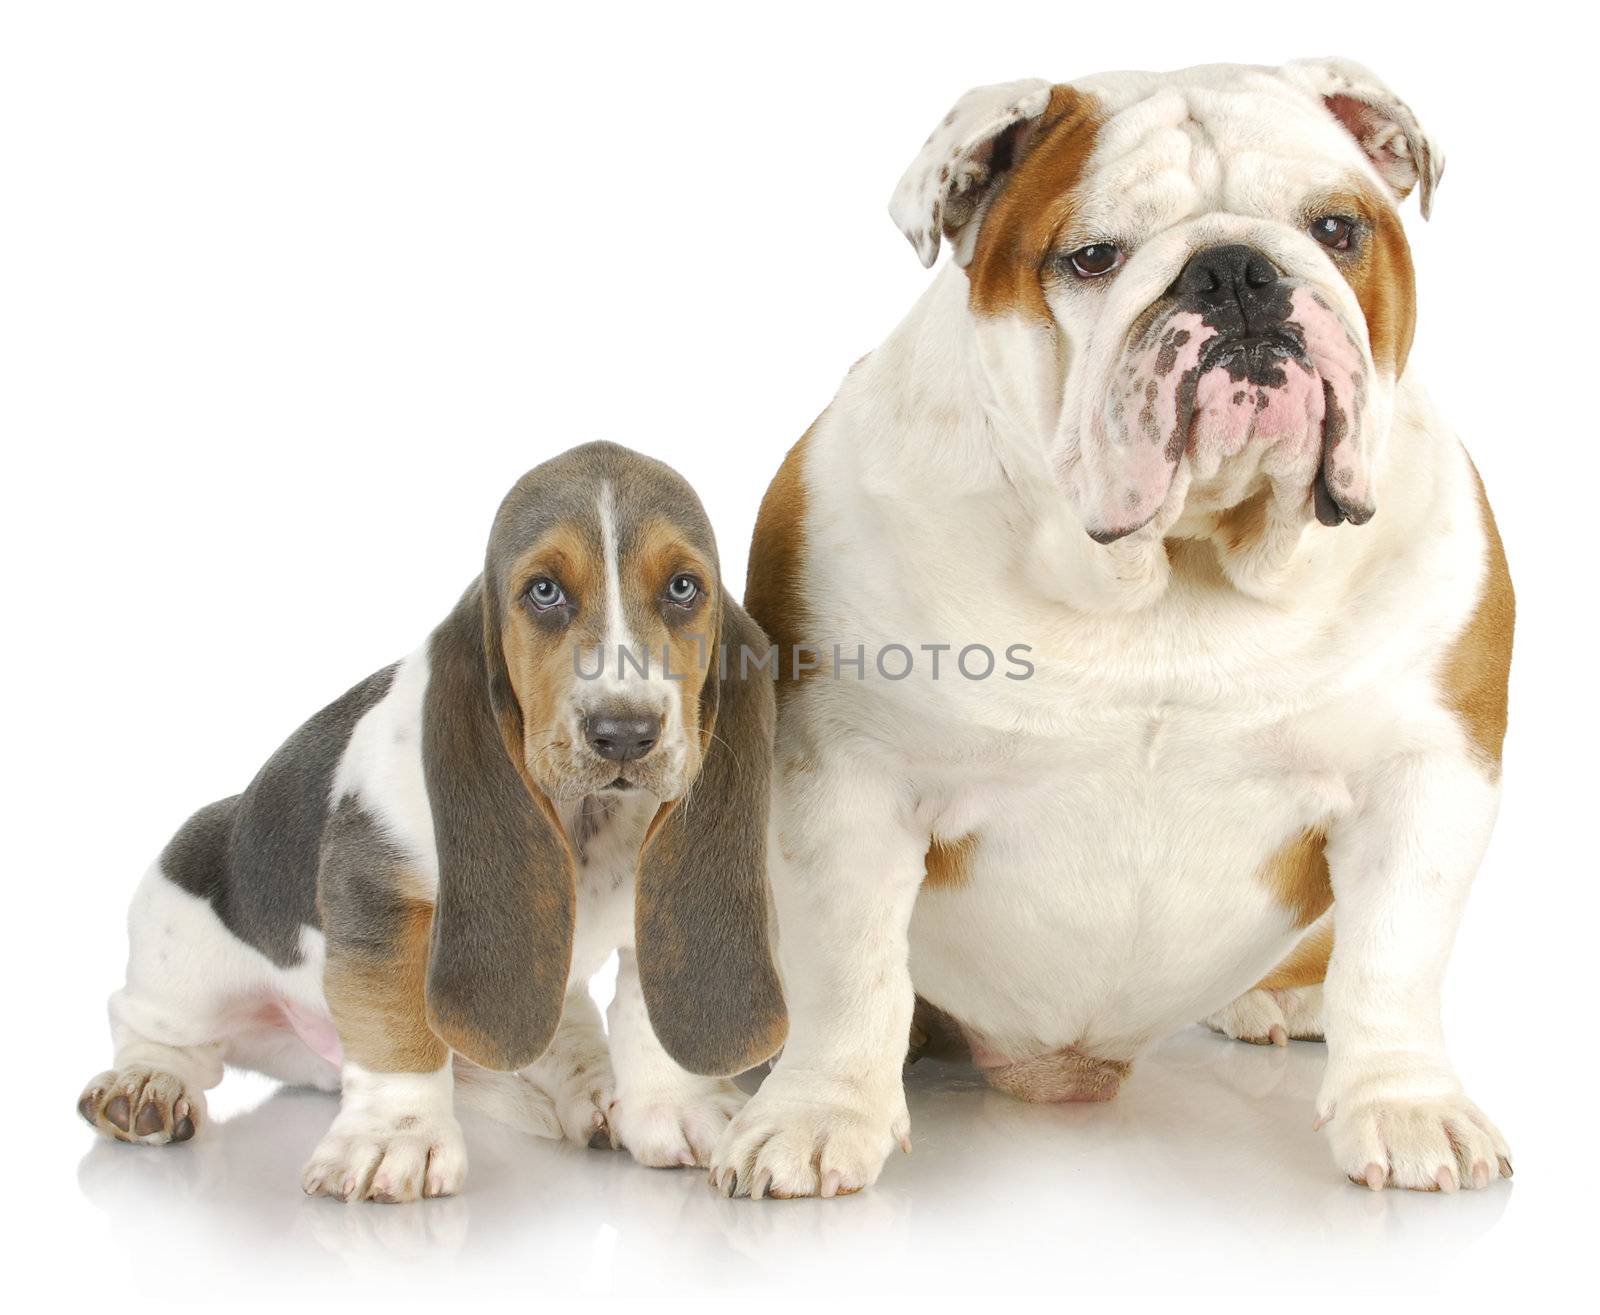 basset hound and bulldog - basset hound puppy and english bulldog sitting beside each other on white background